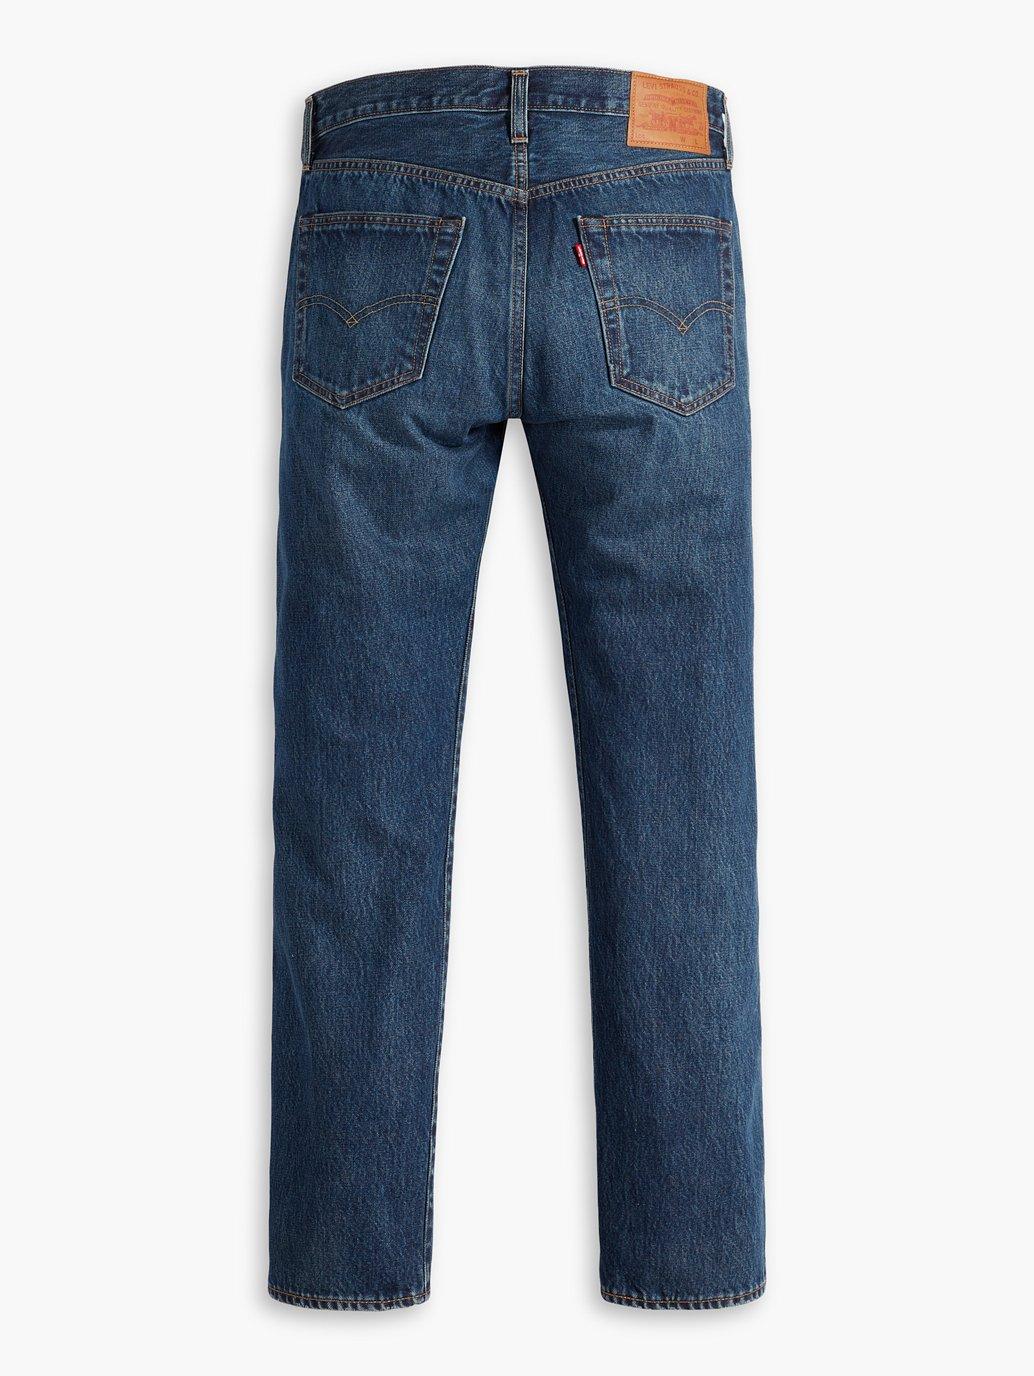 Buy Levi's® Men's 501® Slim Taper Jeans | Levi’s® Official Online Store MY